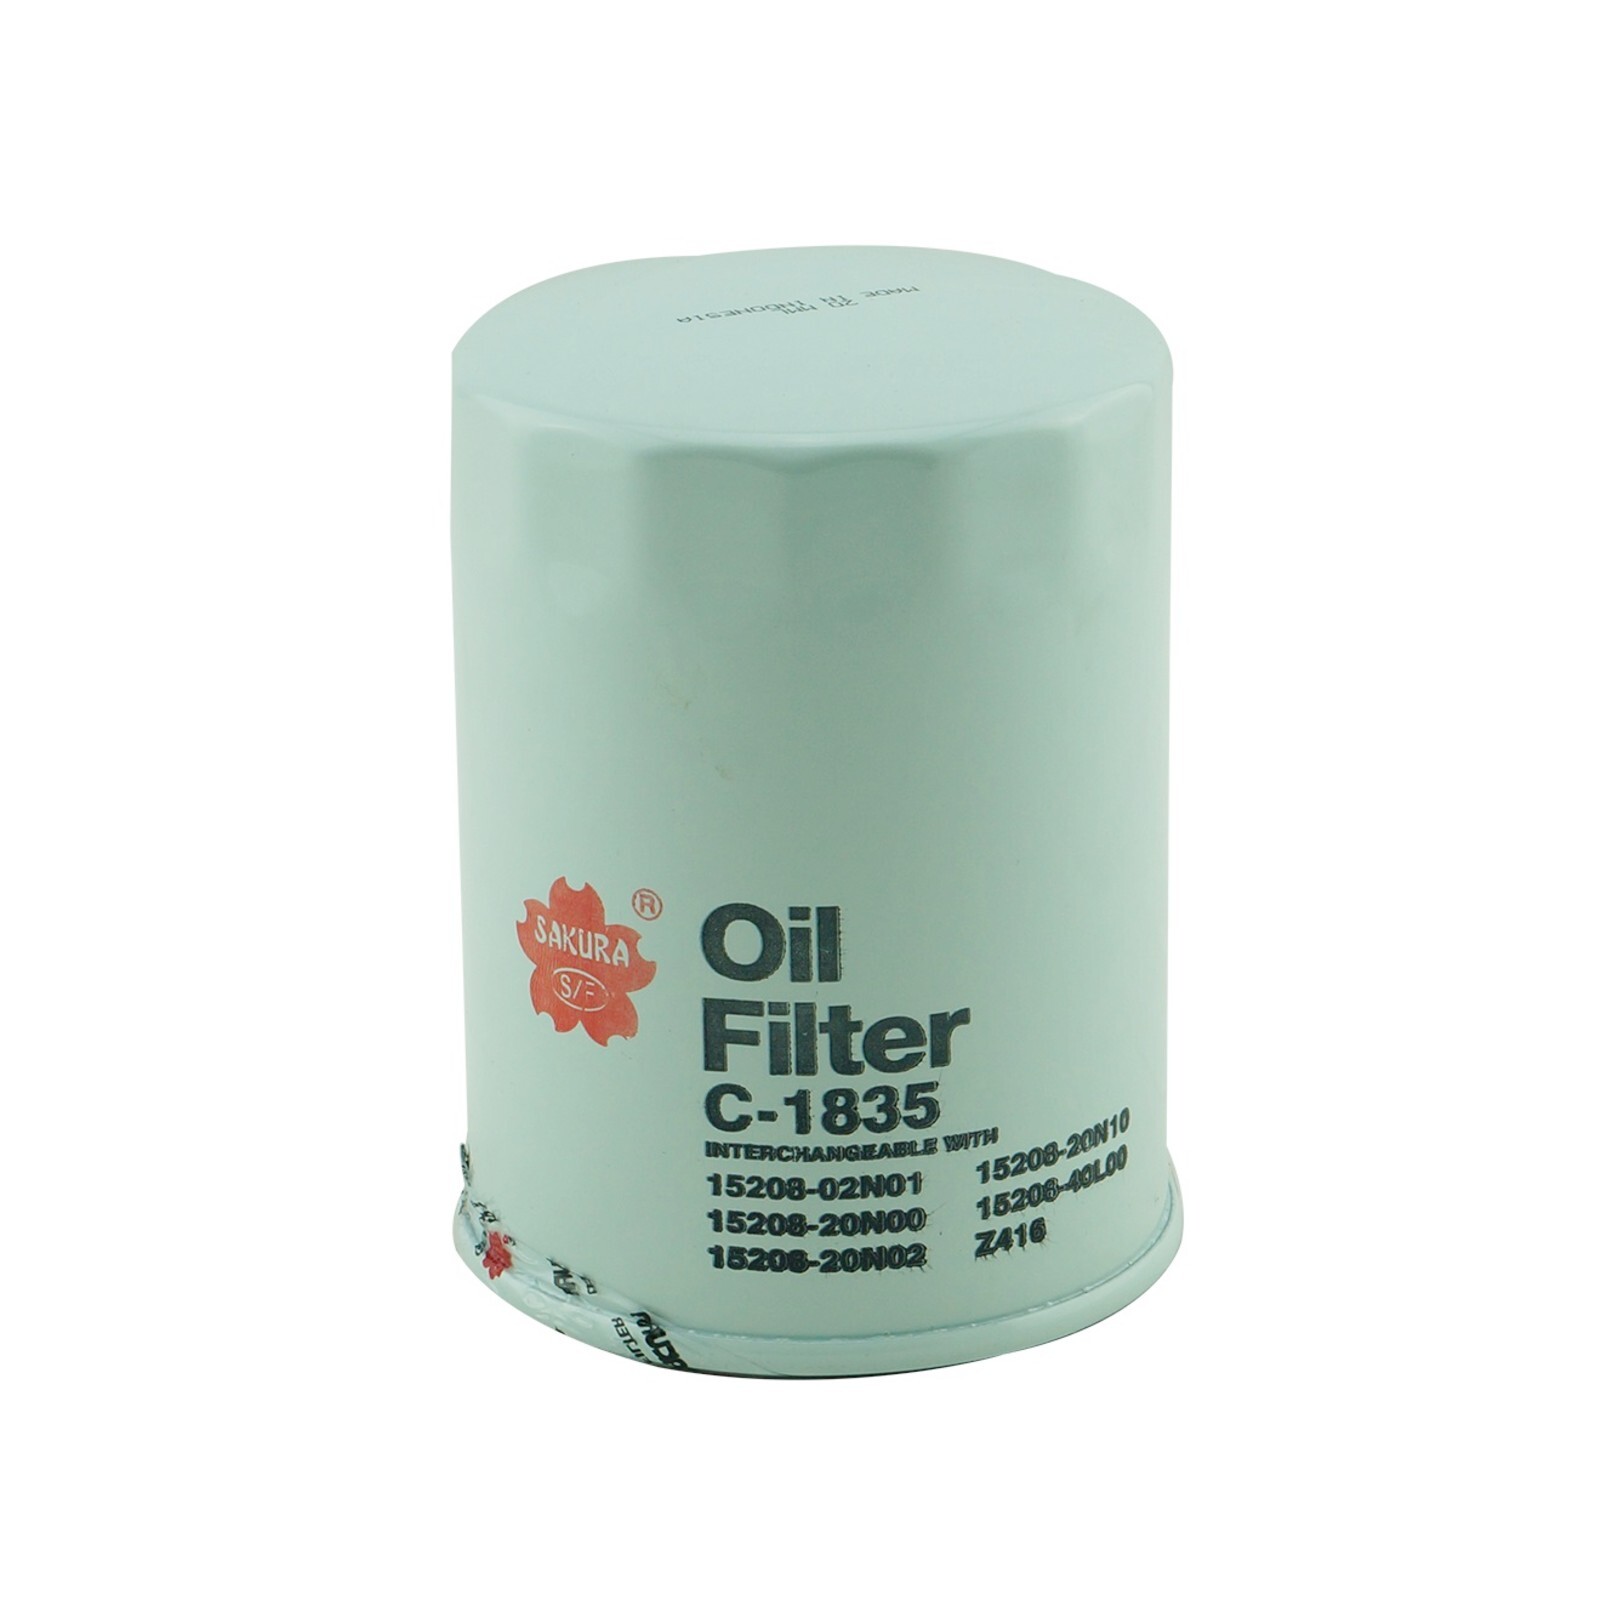 C-1835 Sakura Oil Filter - Fits Nissan + More Xref: Z416, 1520840L02, P502068